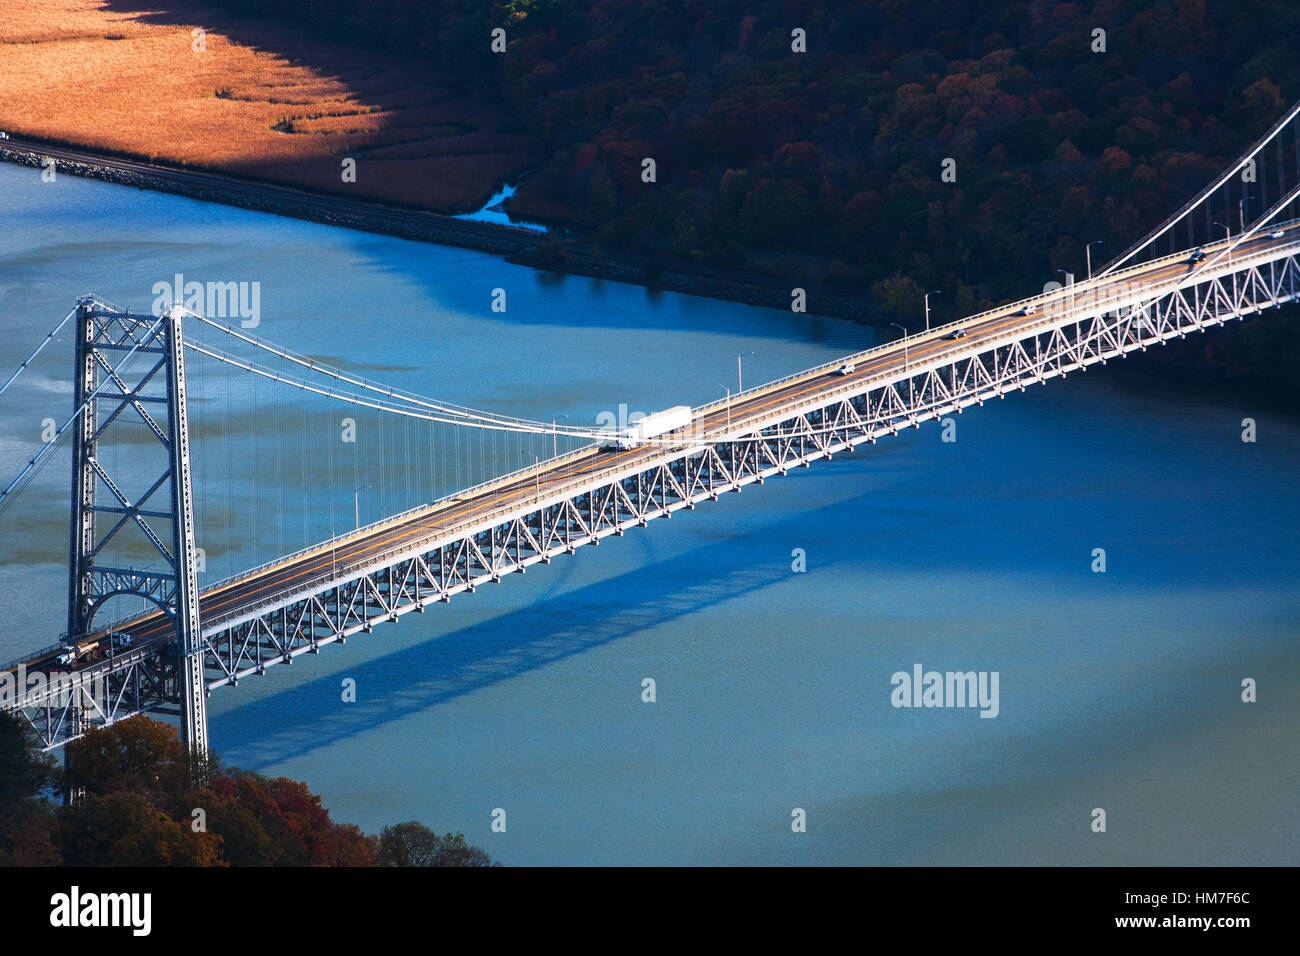 USA, New York, Bear Mountain with bridge above blue river Stock Photo